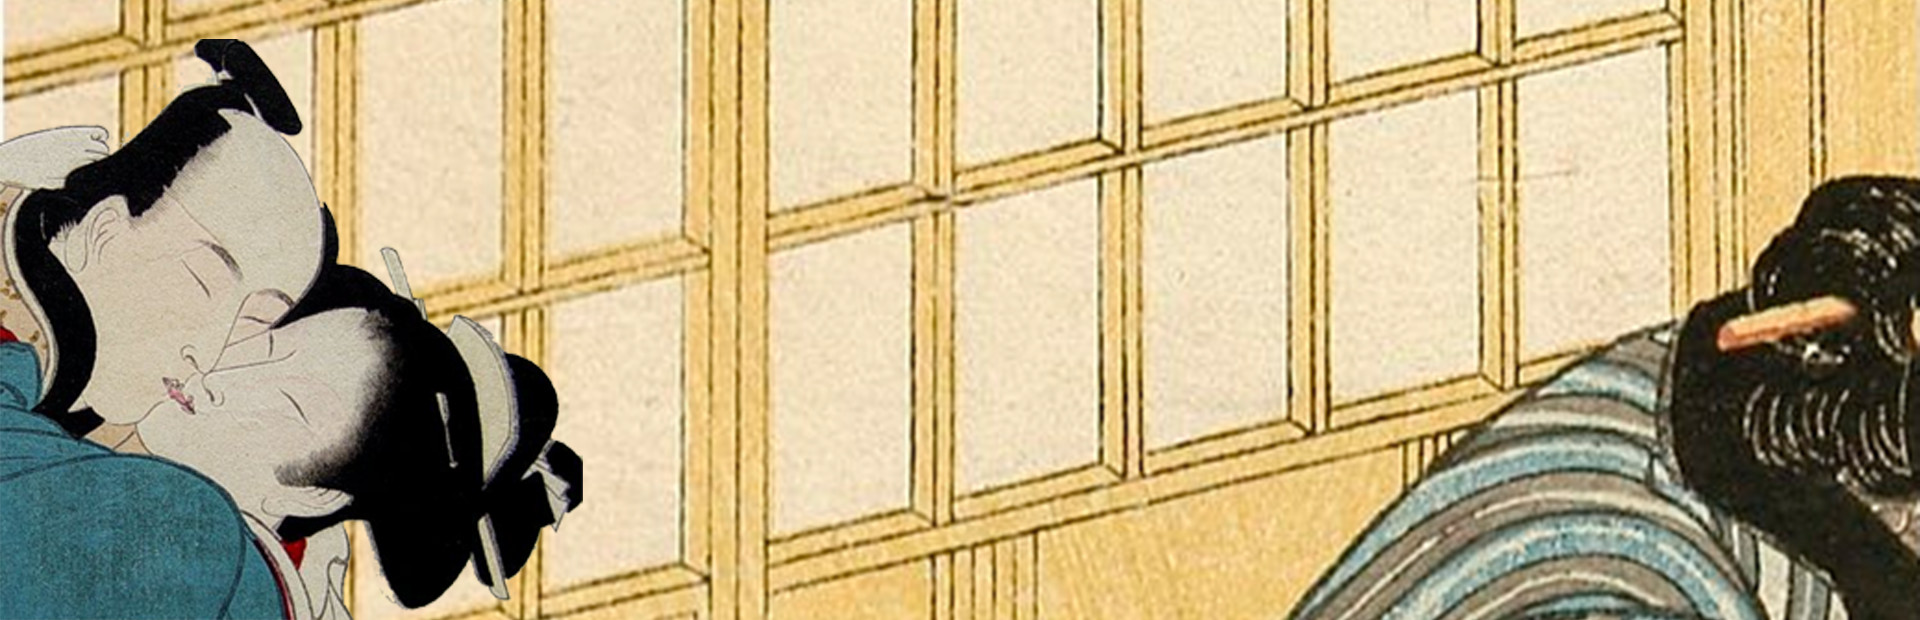 Shunga Frame - Soundtrack Featured Screenshot #1